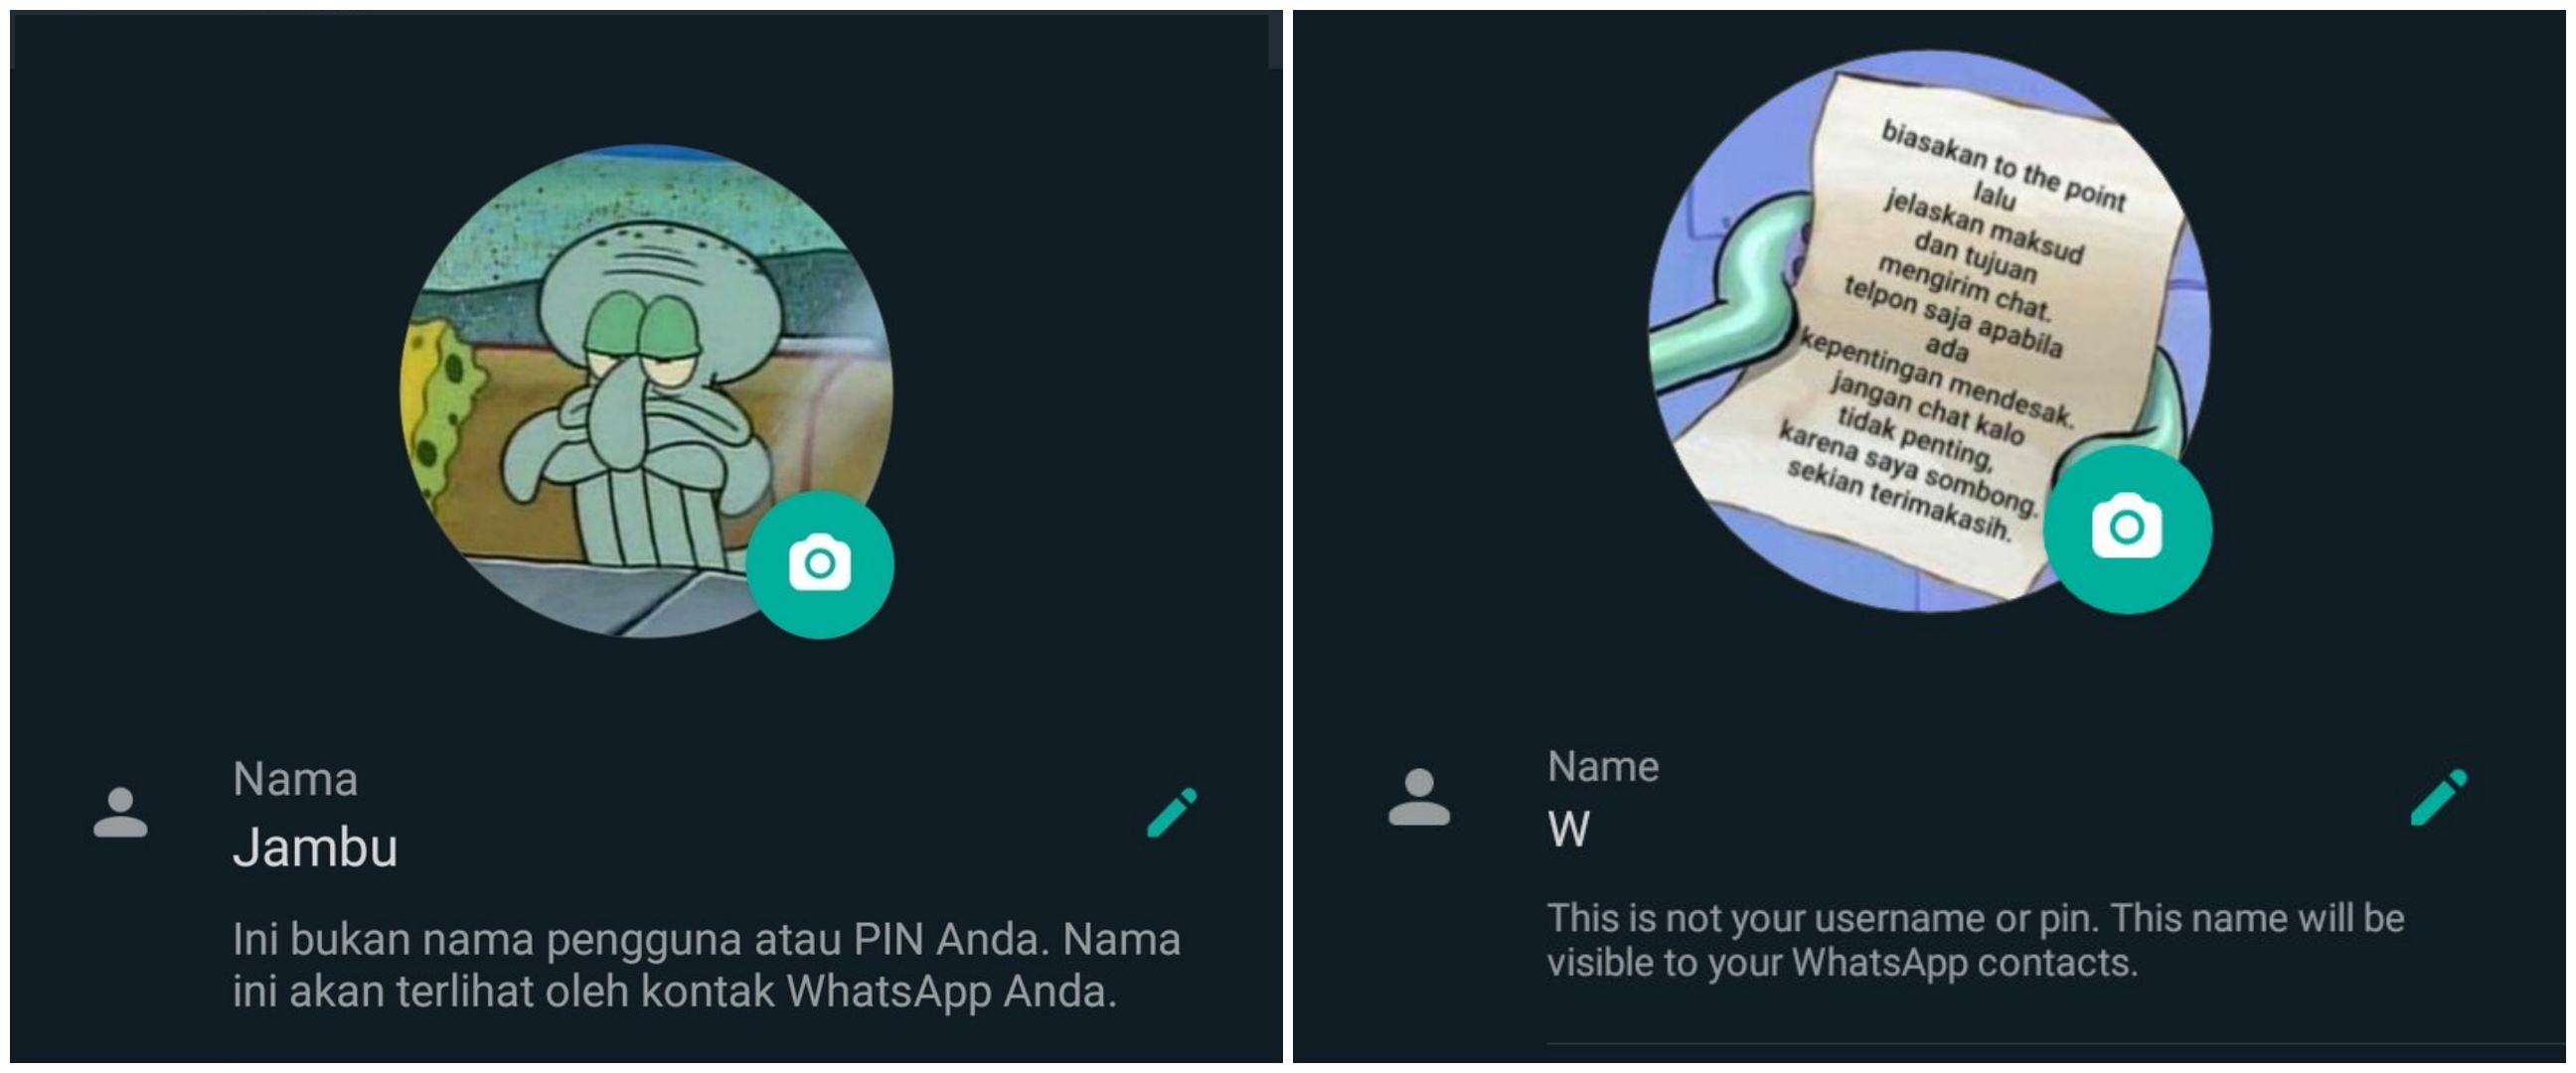 11 Foto profil lucu di WhatsApp ini bikin nyengir tipis